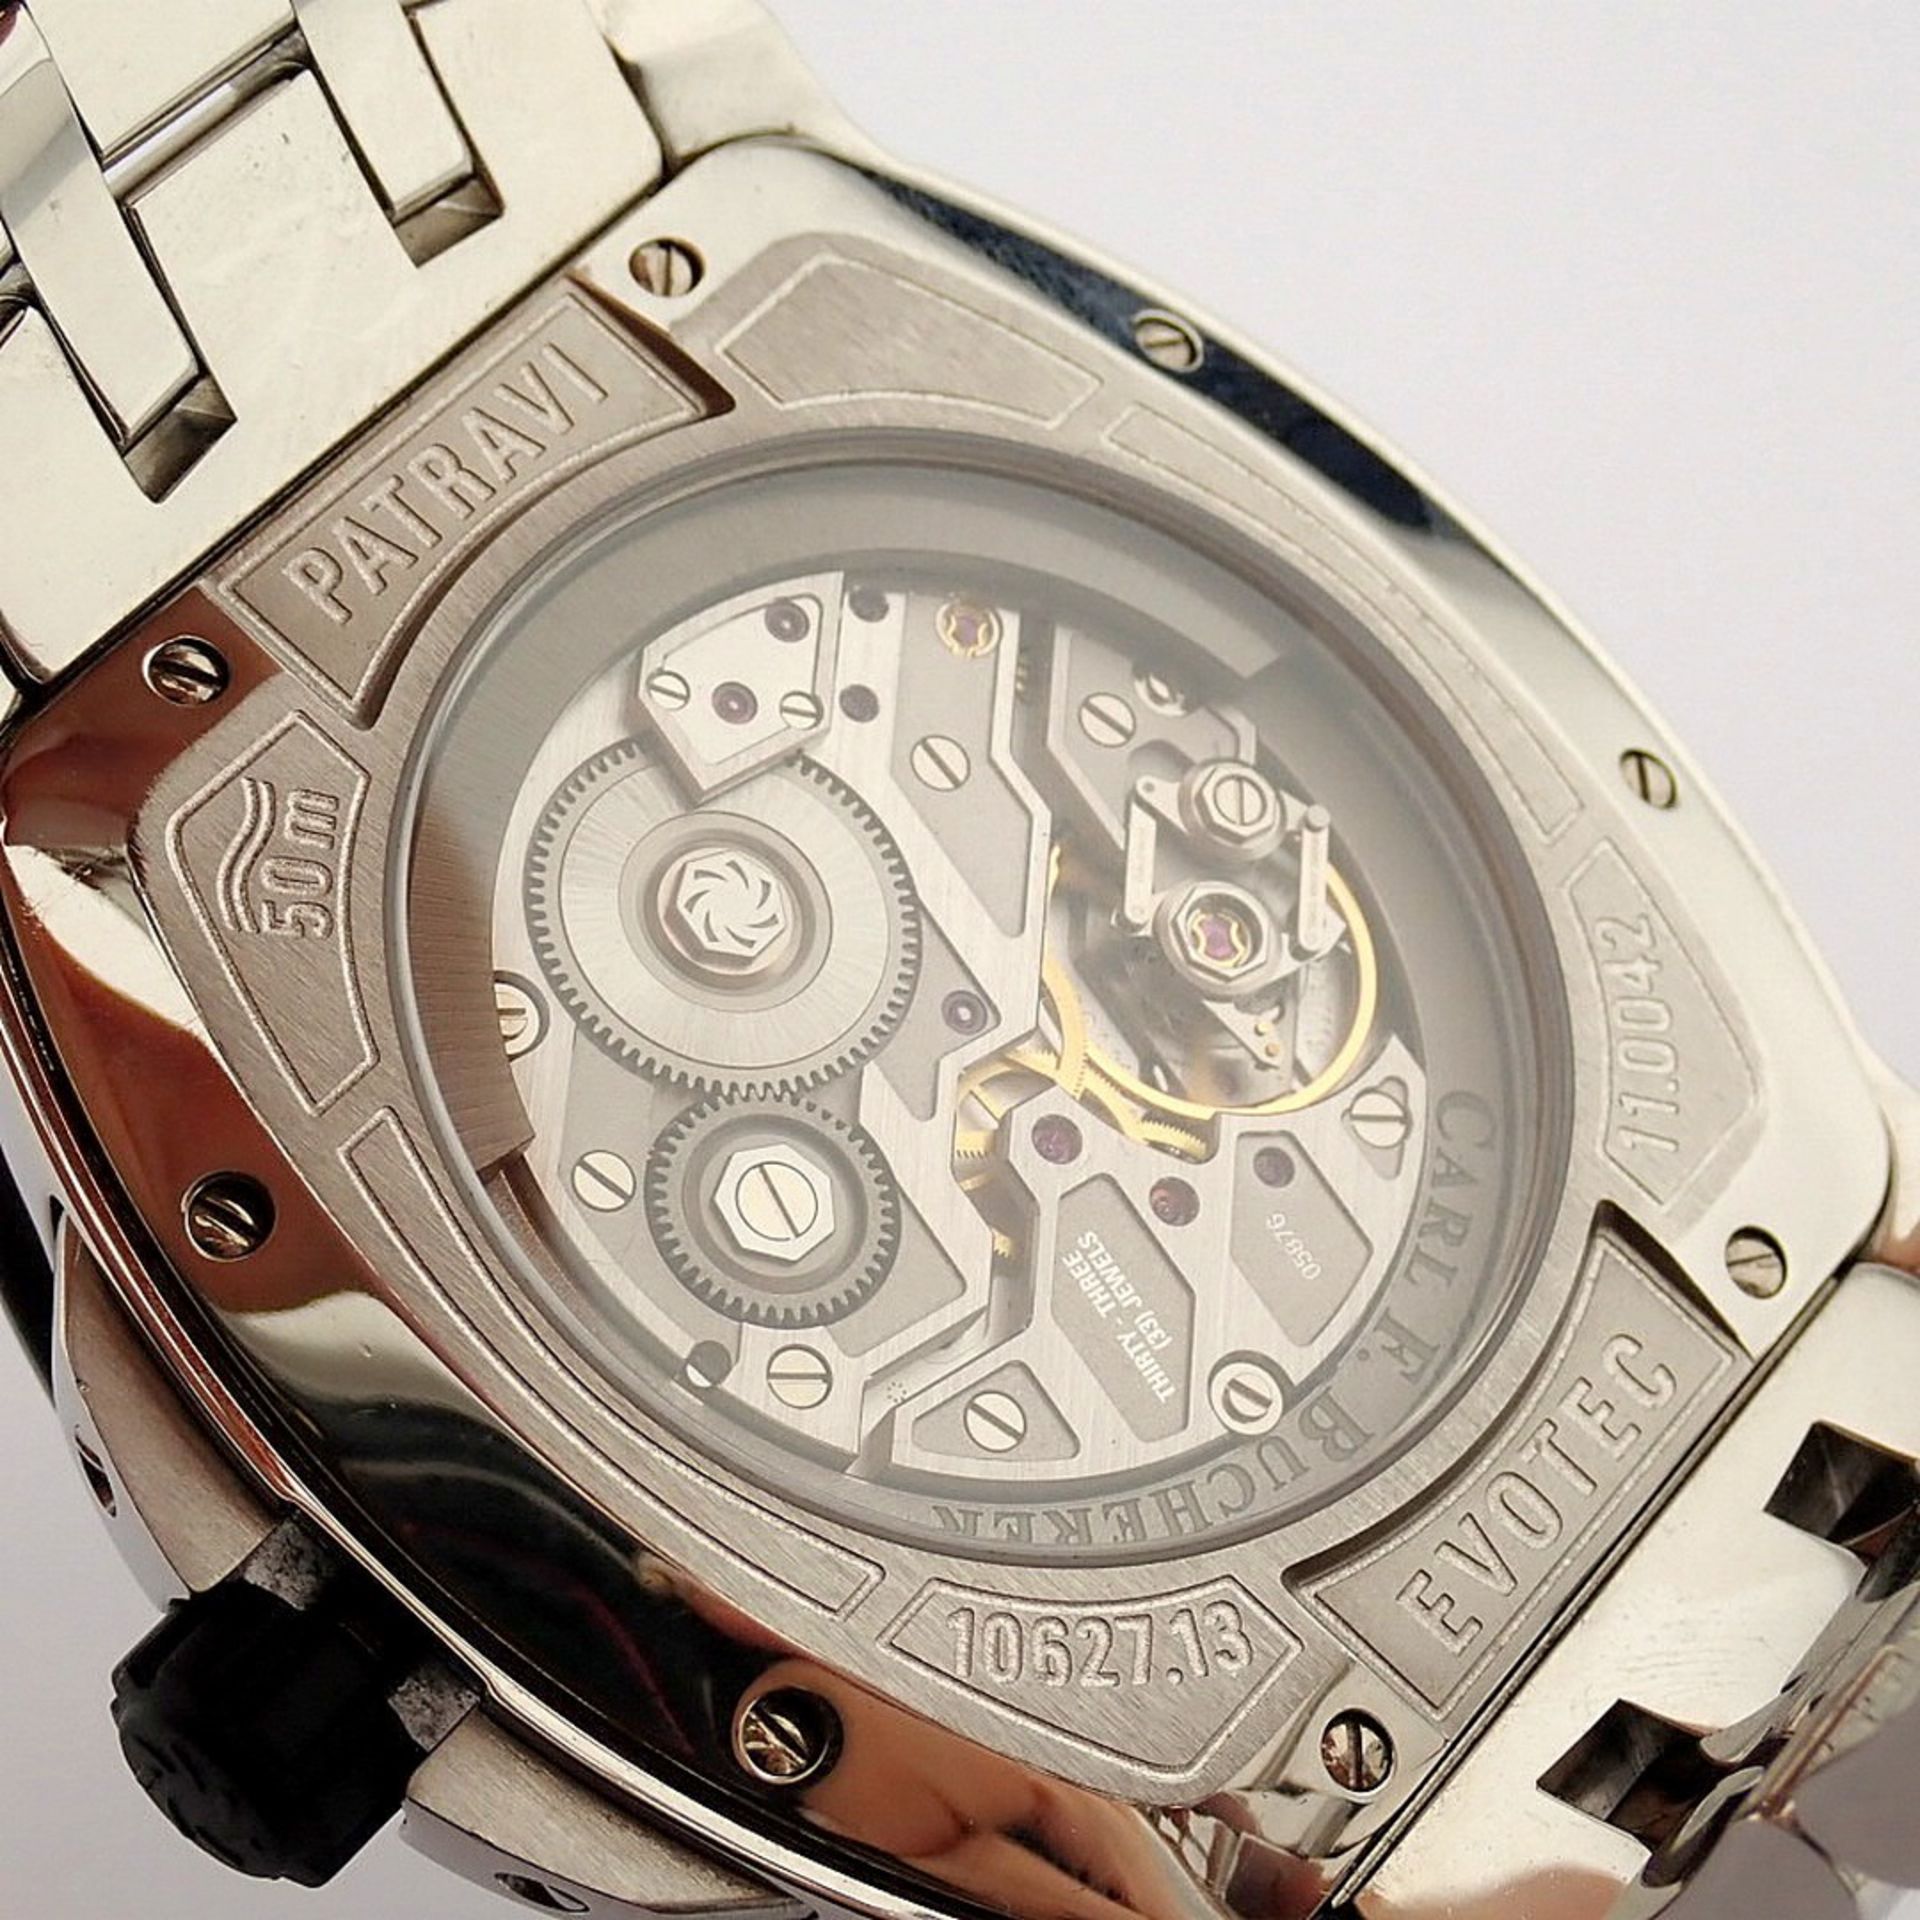 Carl F. Bucherer / Patravi Evotec Power Reserve - Gentlmen's Steel Wrist Watch - Image 10 of 12